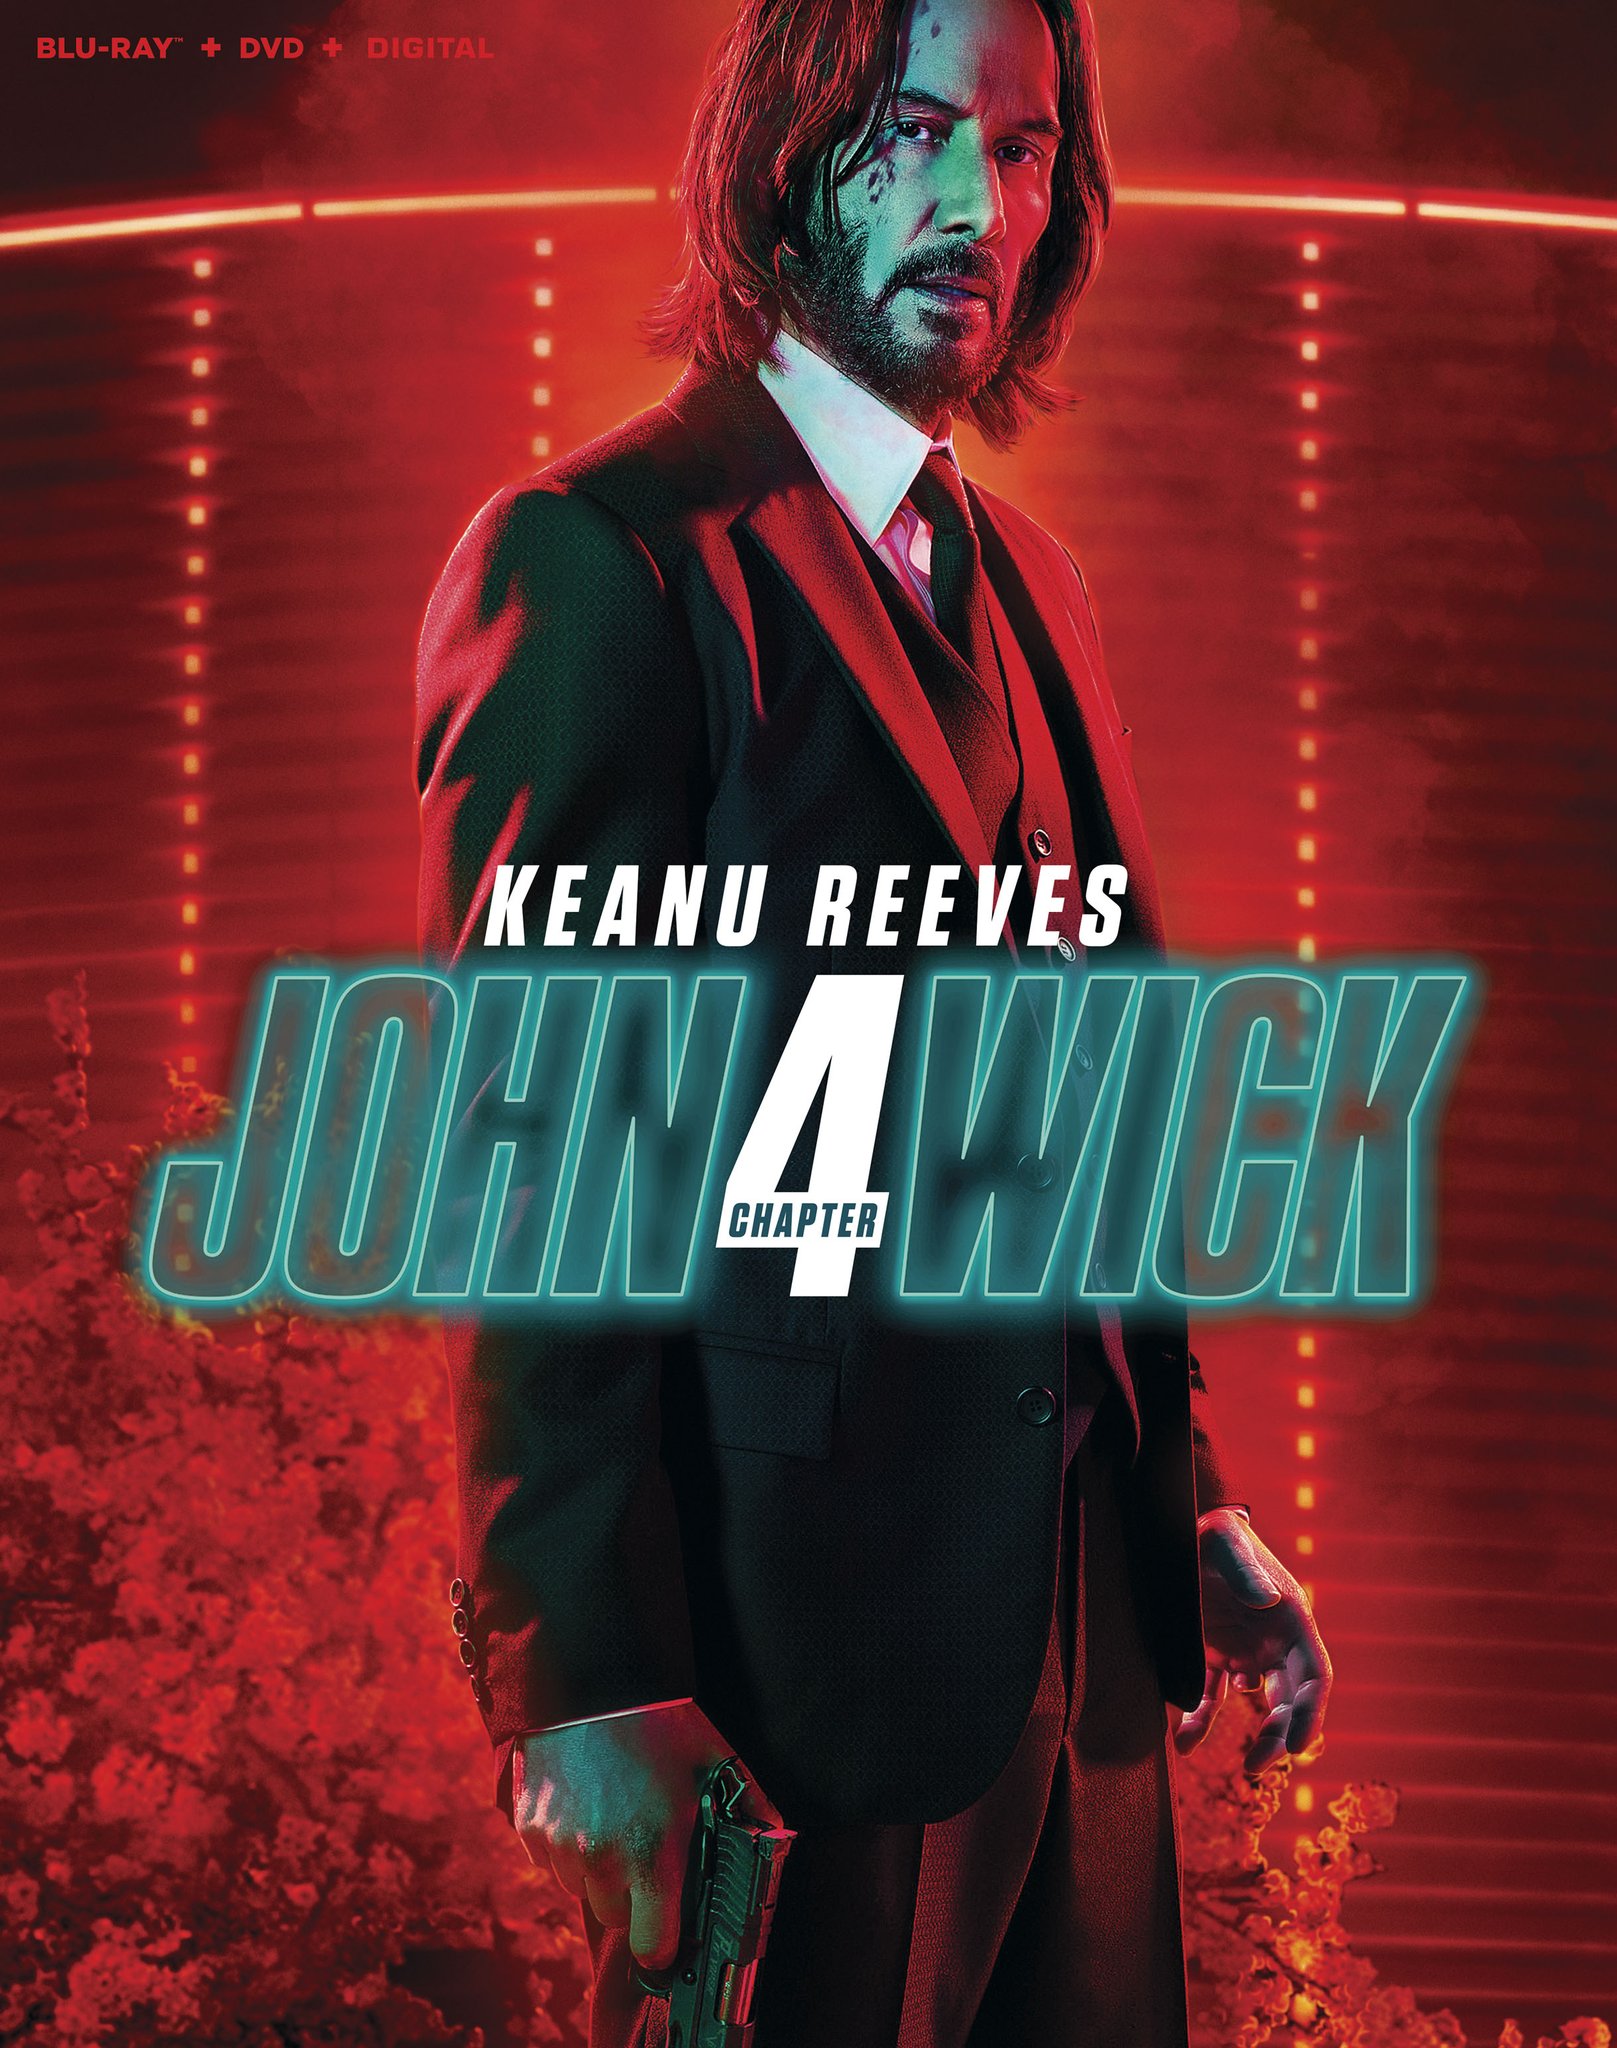 Every Movie Plug 🎬 🔌 on X: 'JOHN WICK 5' is being written